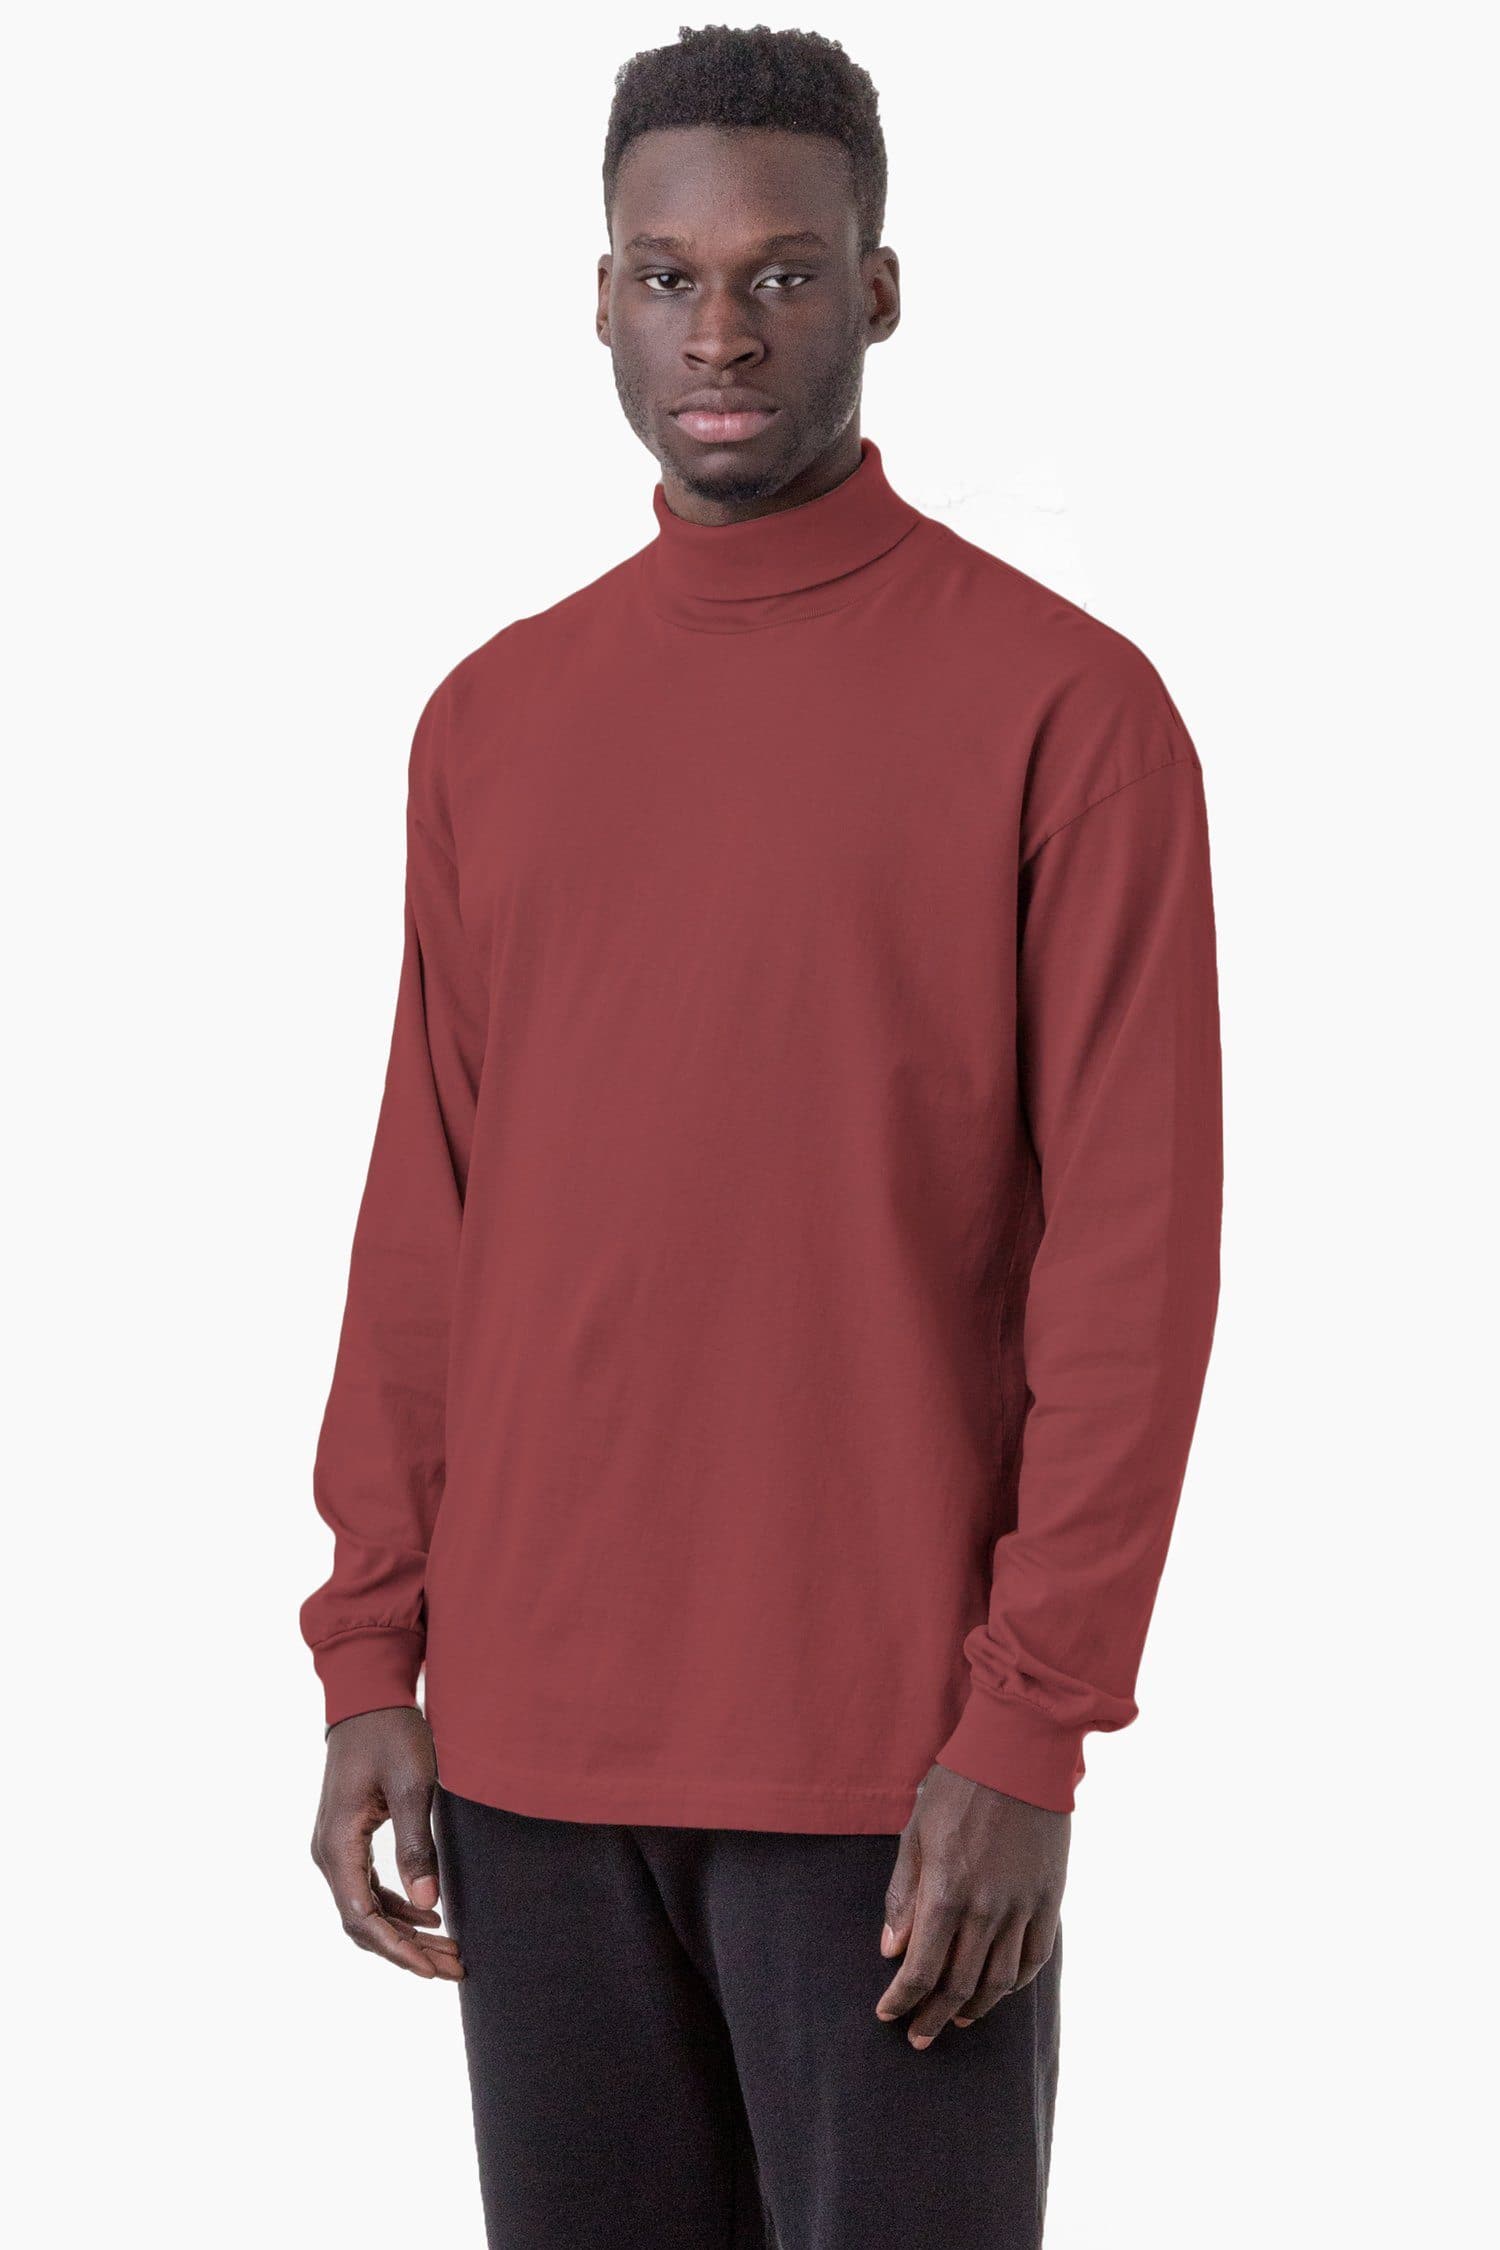 Los Angeles Apparel | Long Sleeve Garment Dye Turtleneck in Black, Size Medium